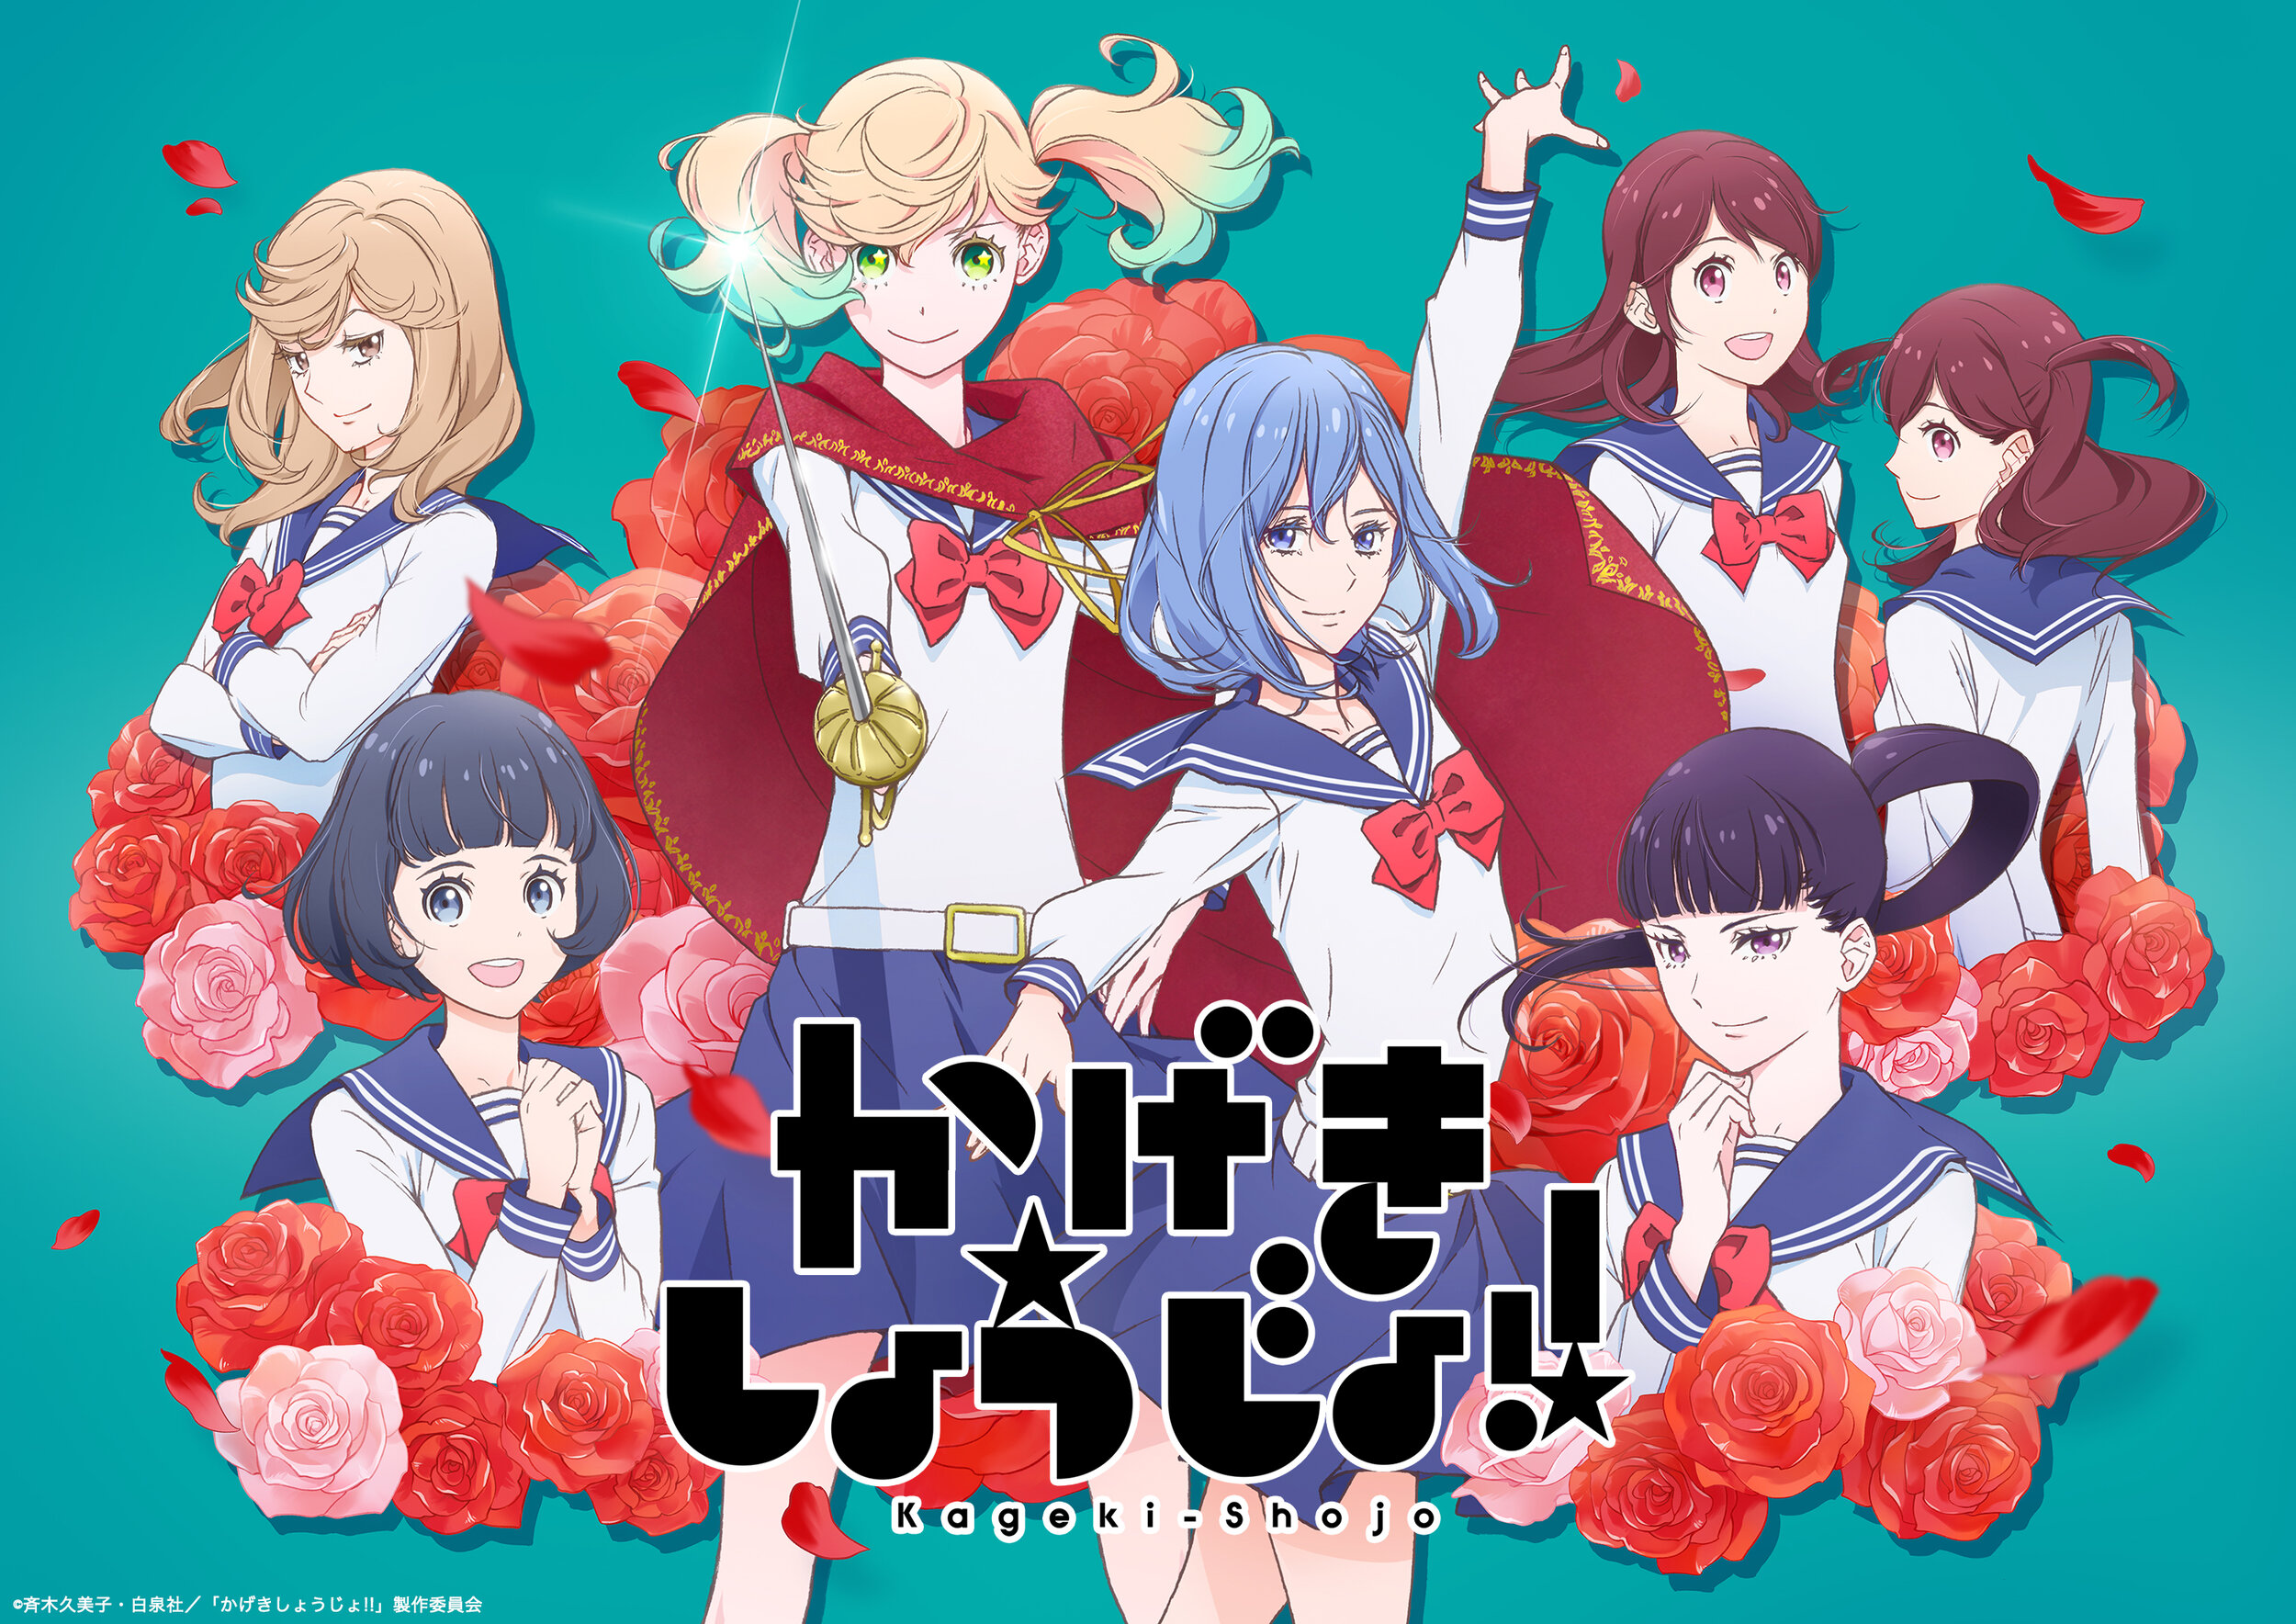 Kageki-Shoujo Anime New Promo Video, Cast, Visual Revealed - Anime Corner